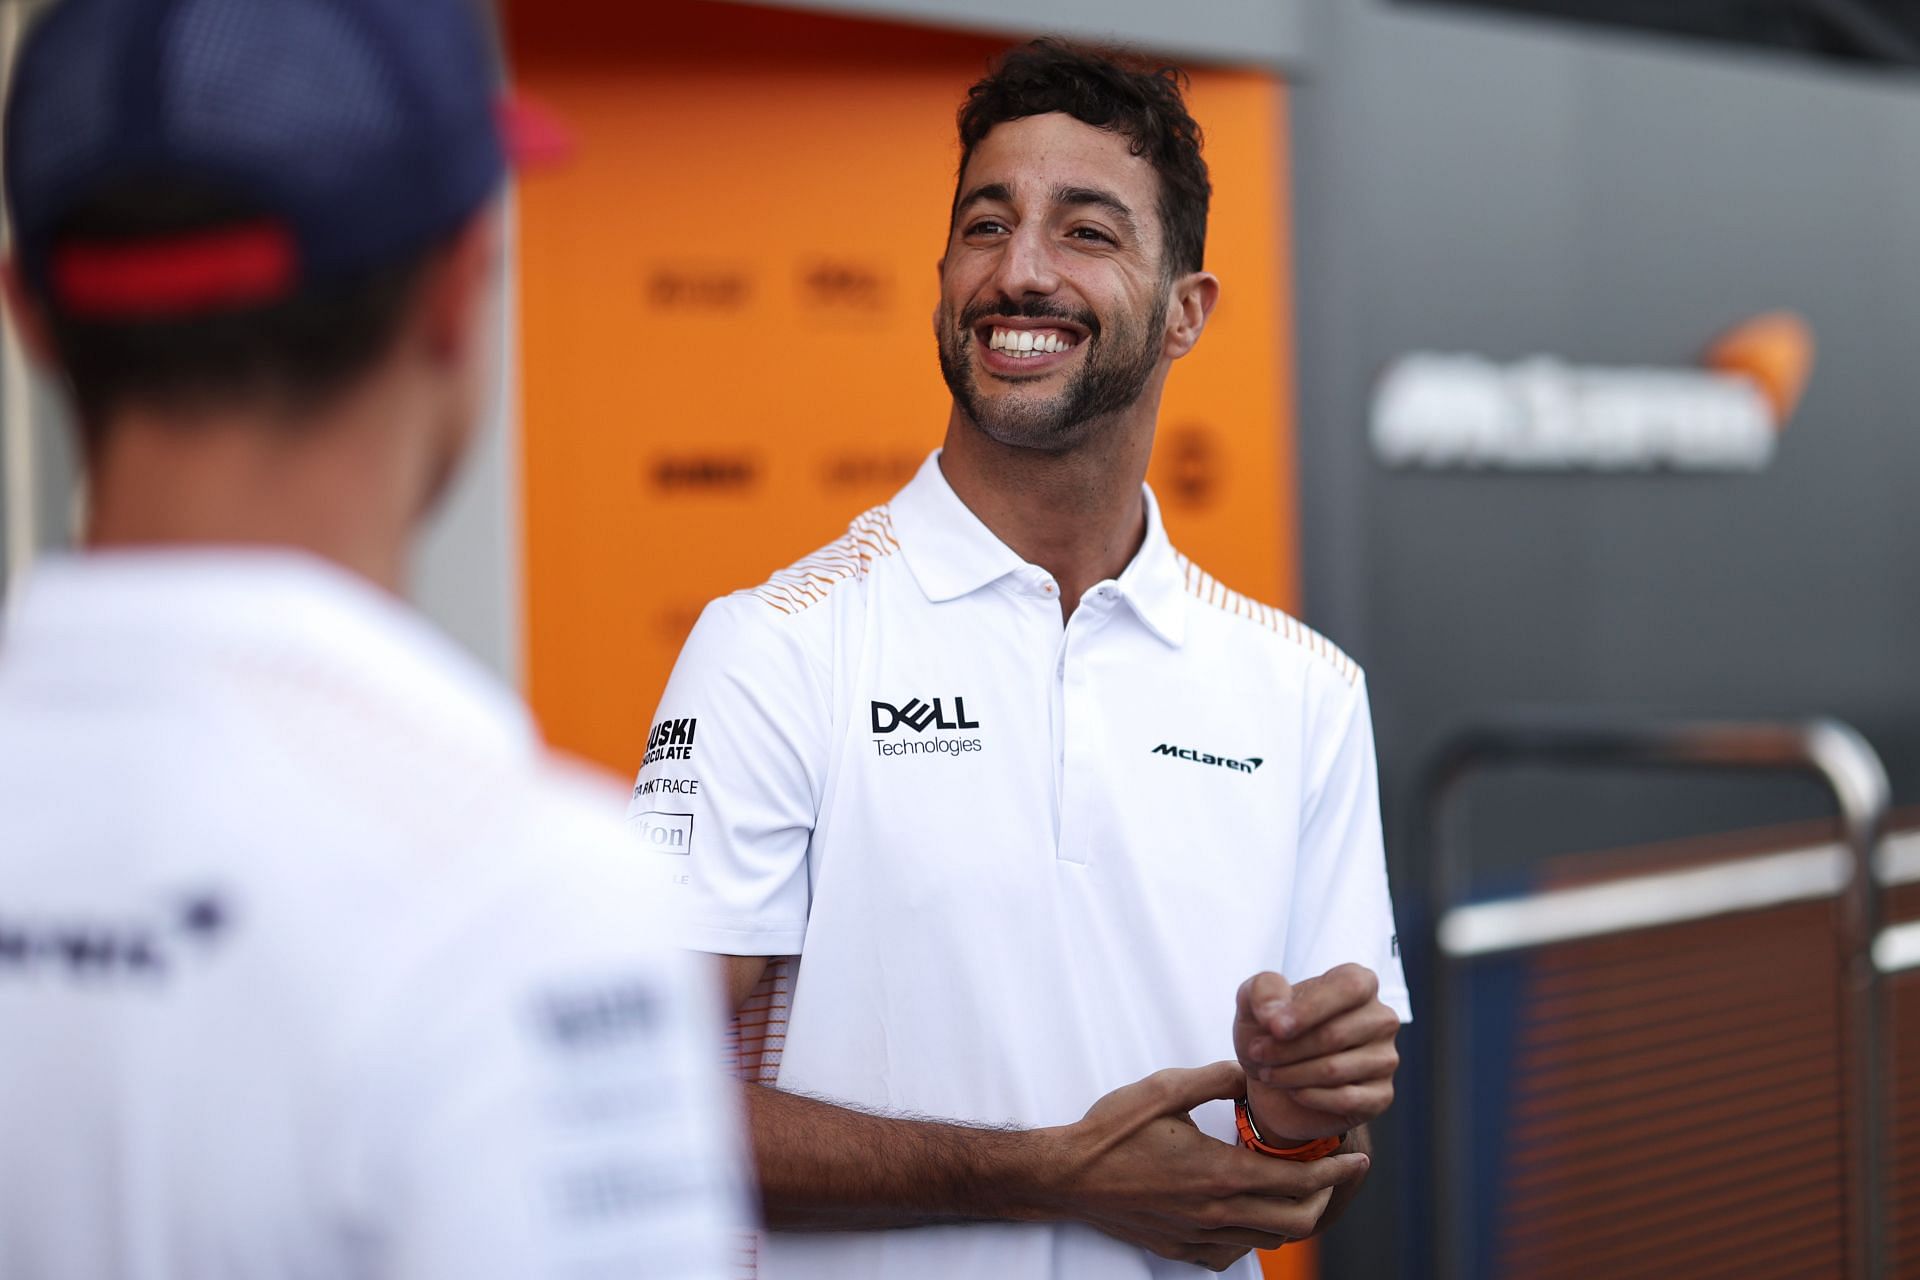 F1 Grand Prix of USA - Daniel Ricciardo smiling as always.